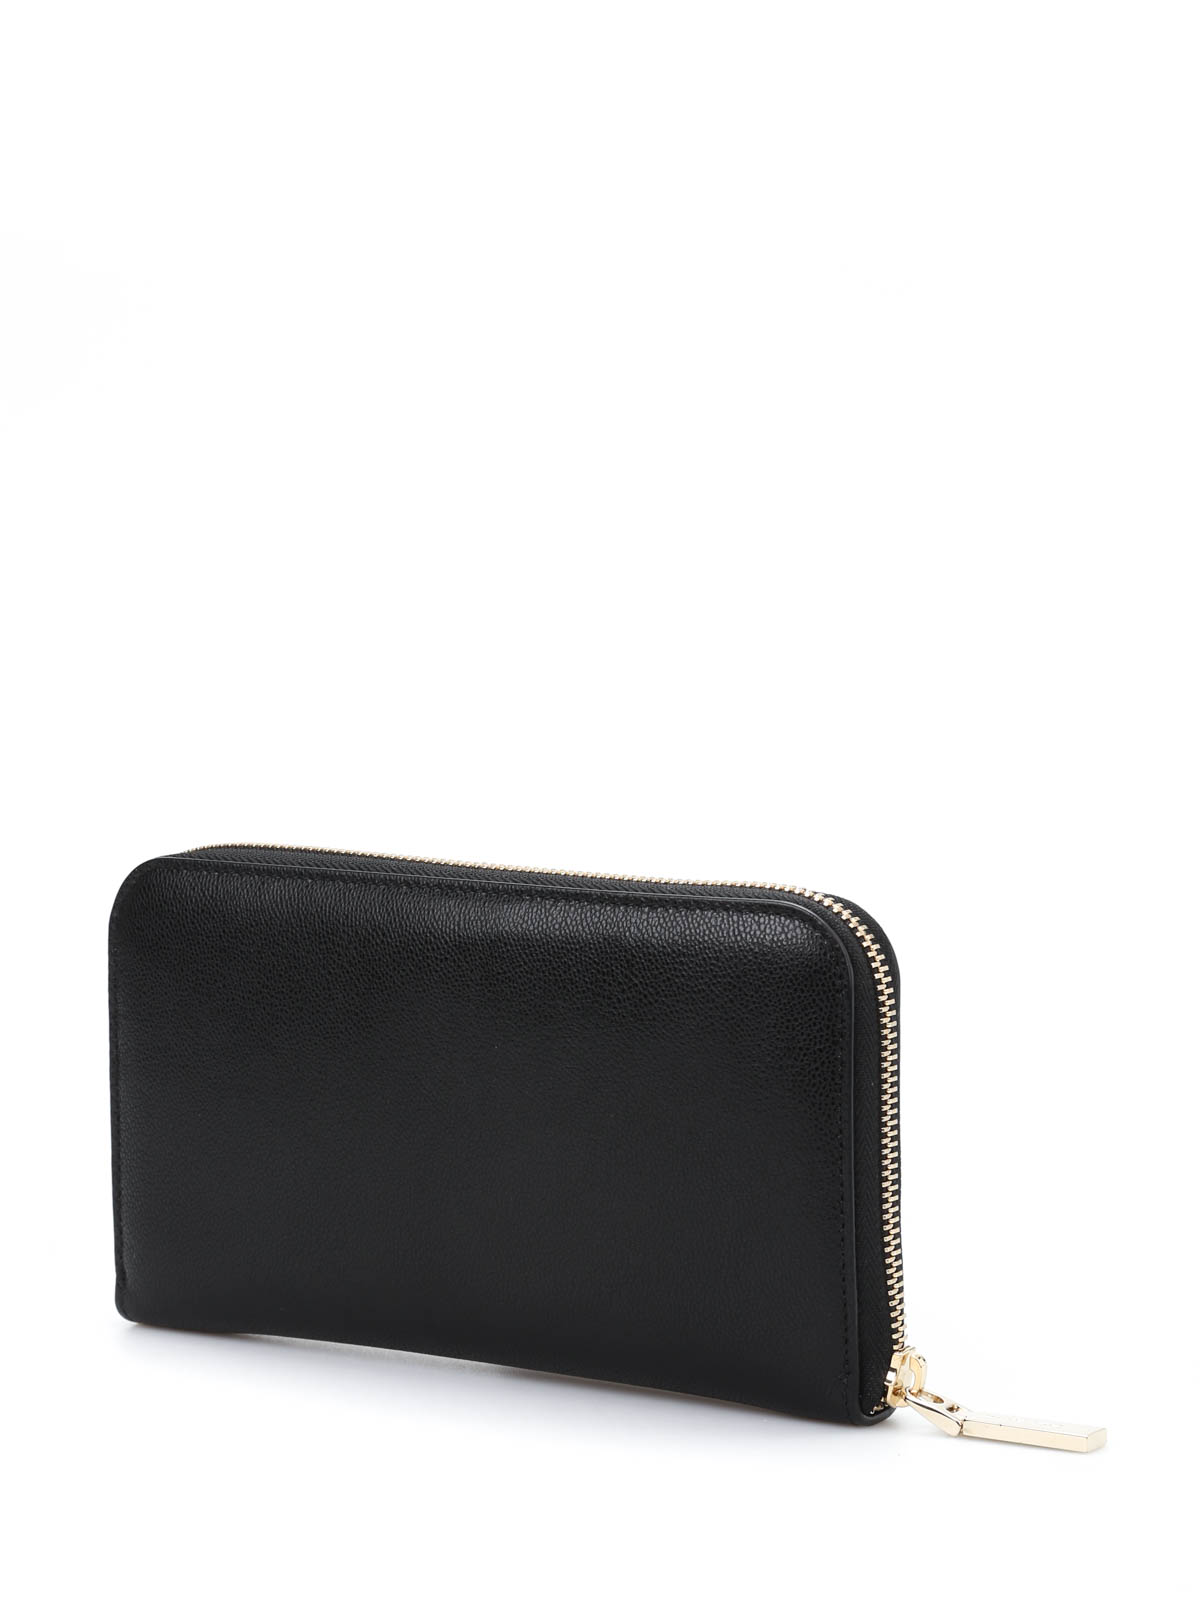 Wallets & purses Versace - Medusa leather wallet - DPDE457DCEH 